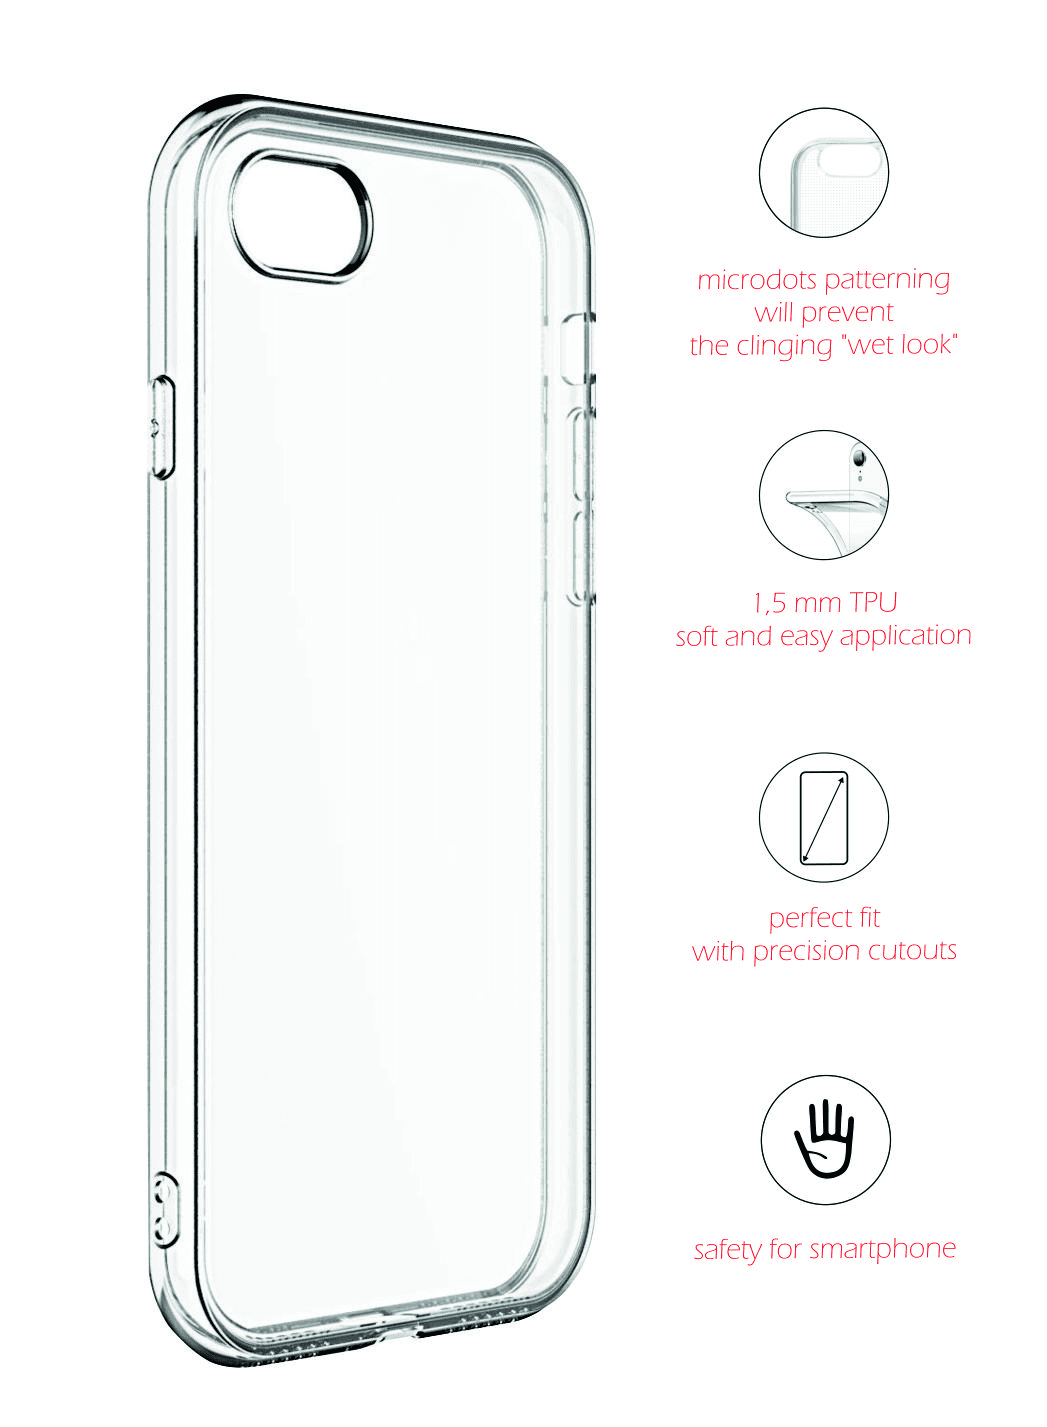 Swissten obal iPhone 15 transparentní Clear Jelly